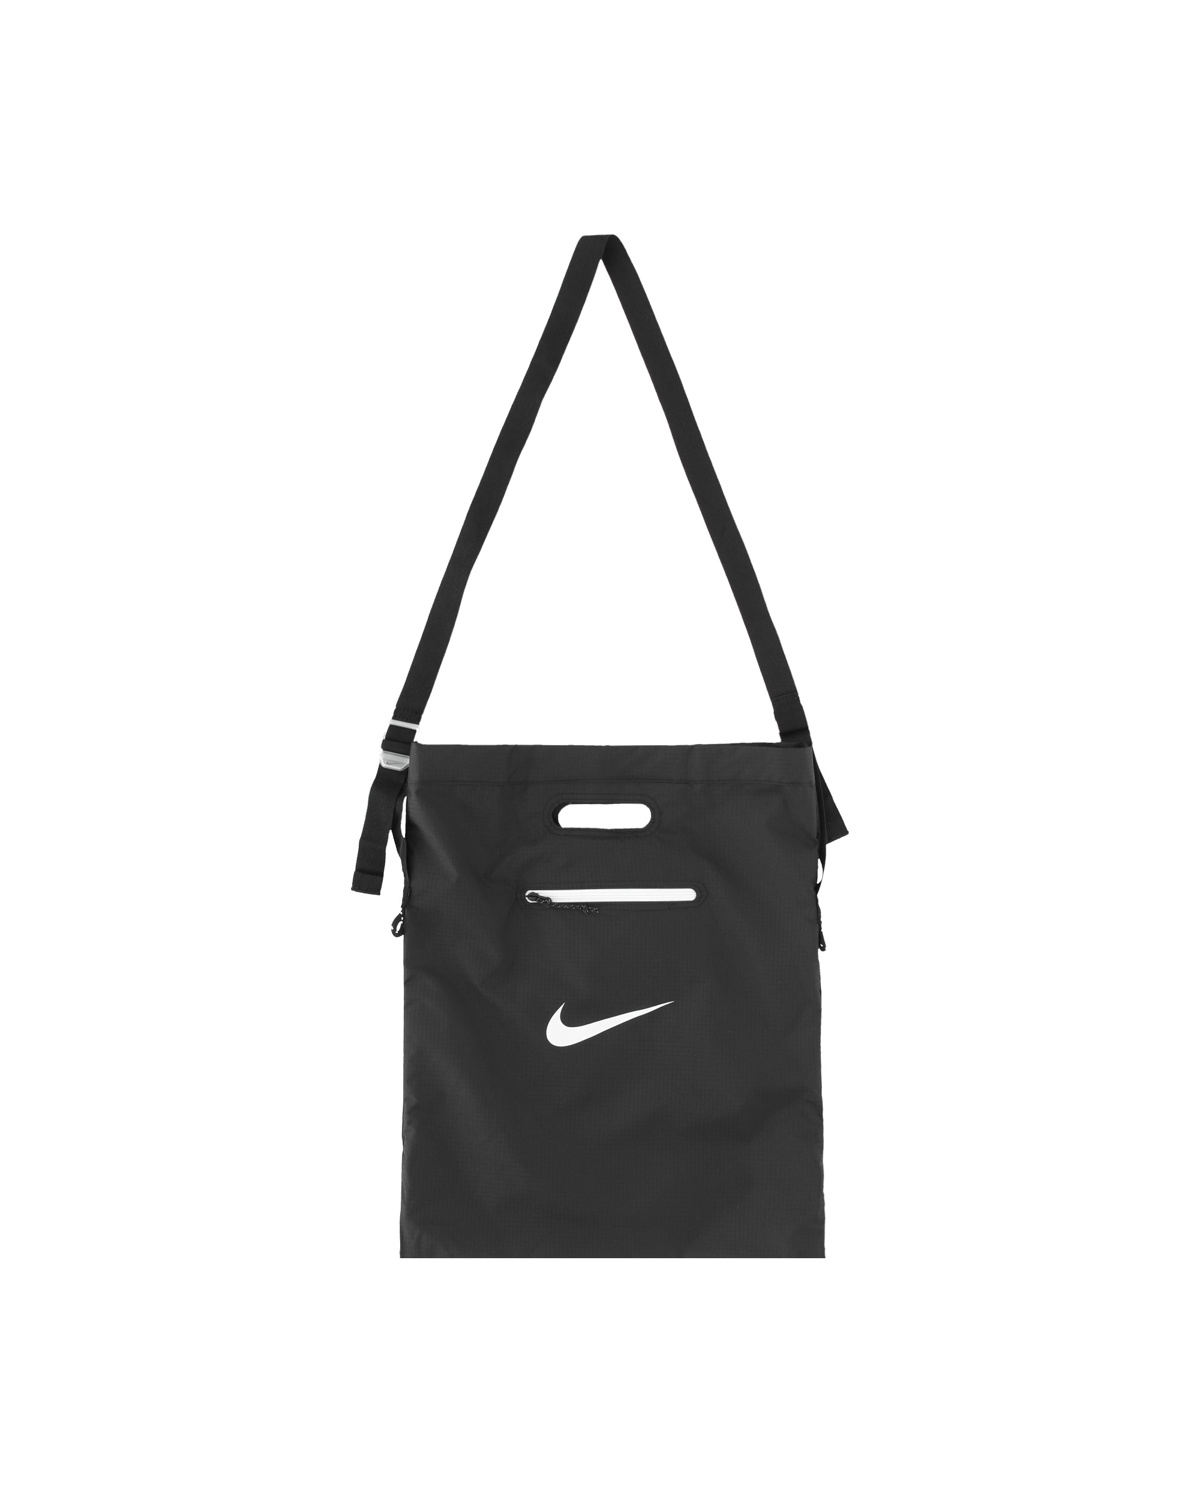 Nike Stash Tote Bag Black